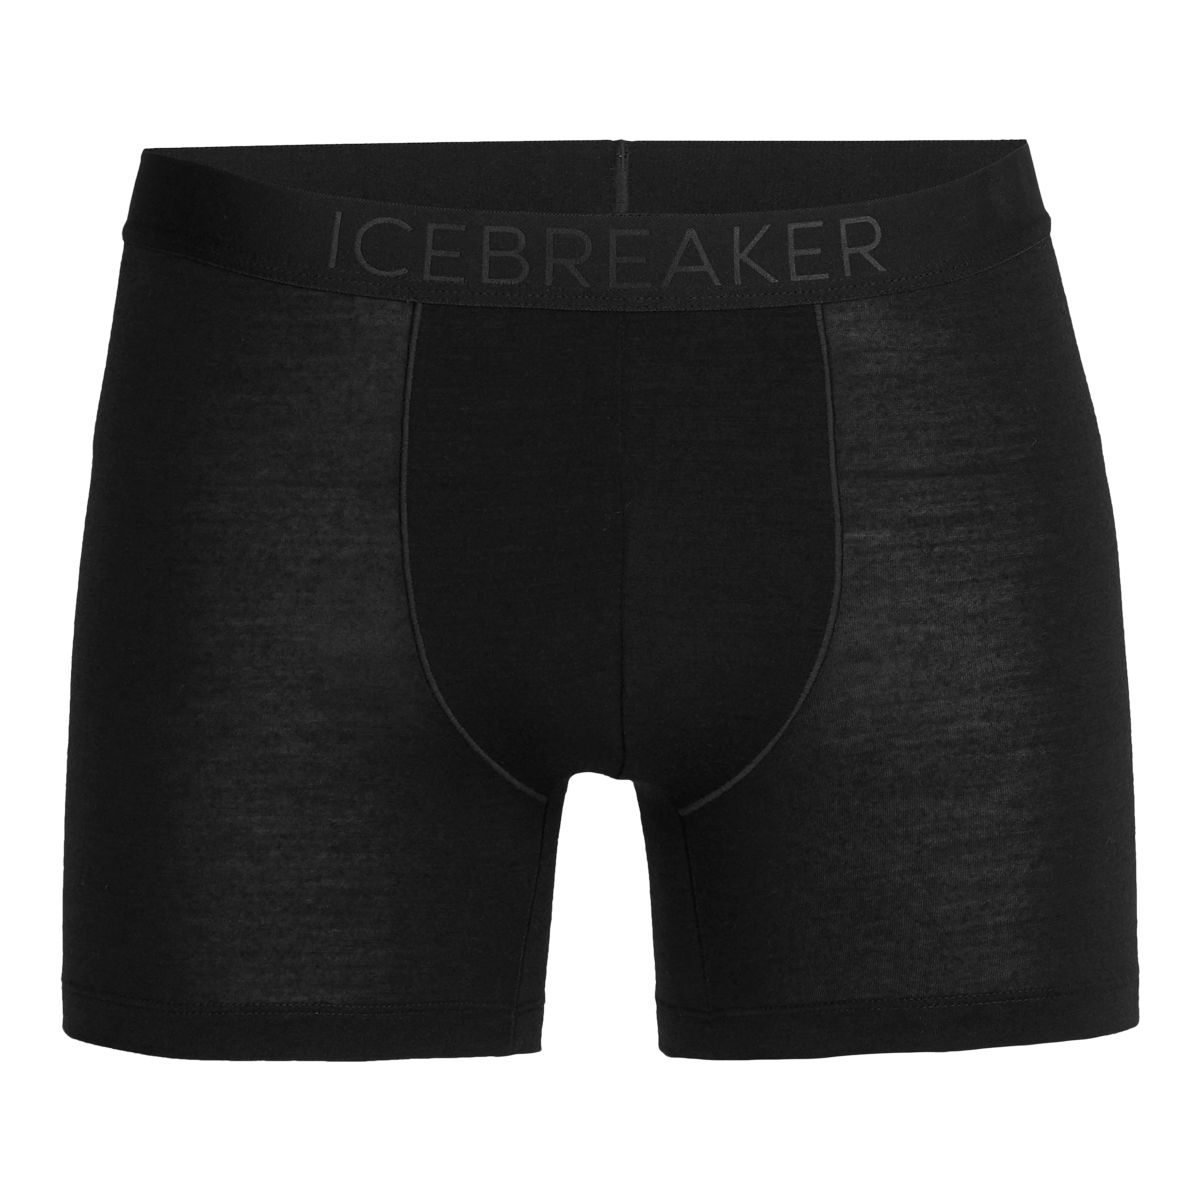 Image of Icebreaker Men's Anatomica Cool-Lite Boxers